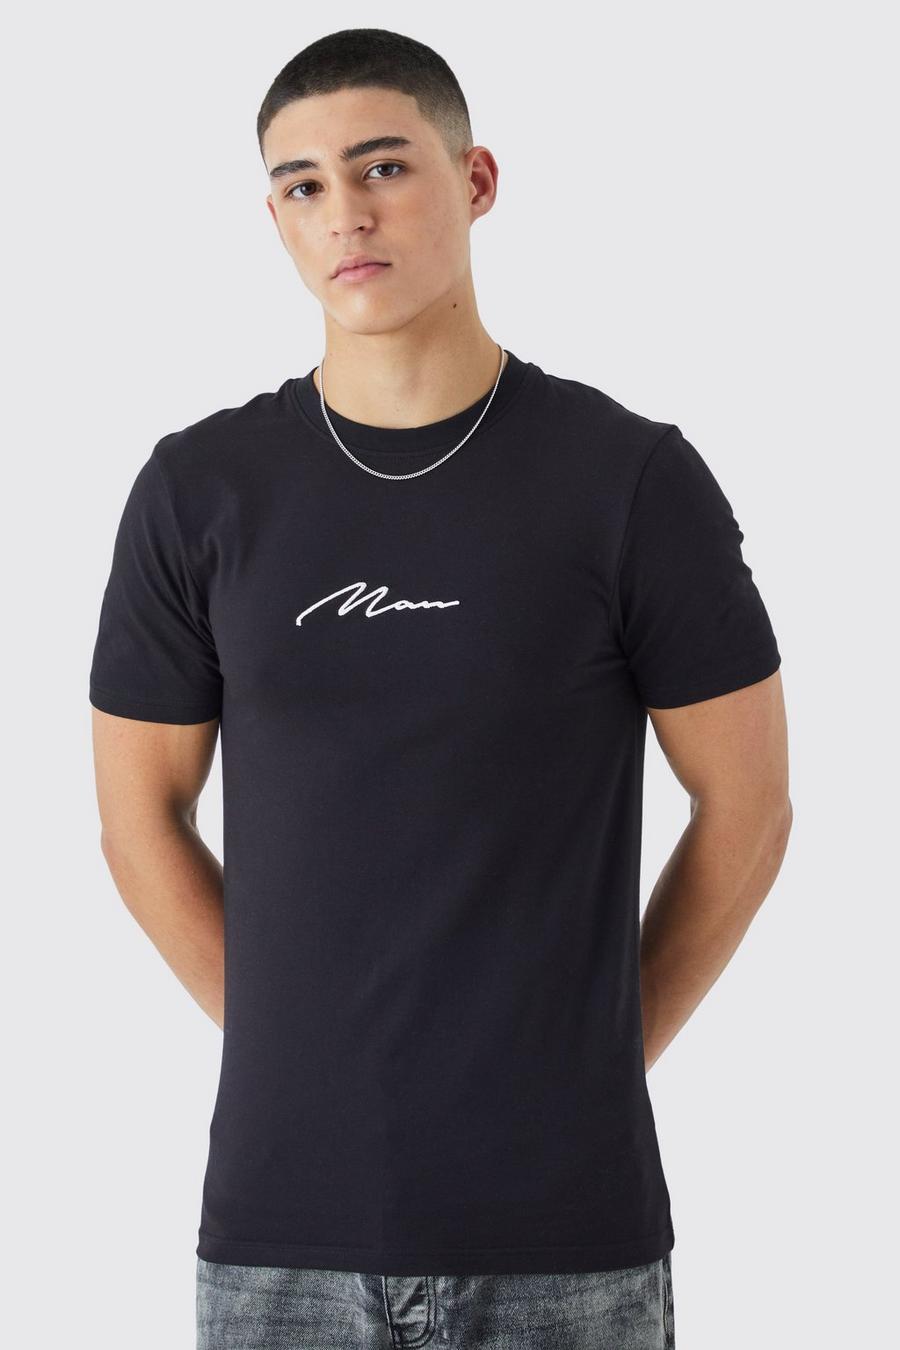 T-shirt attillata con firma Man, Black image number 1